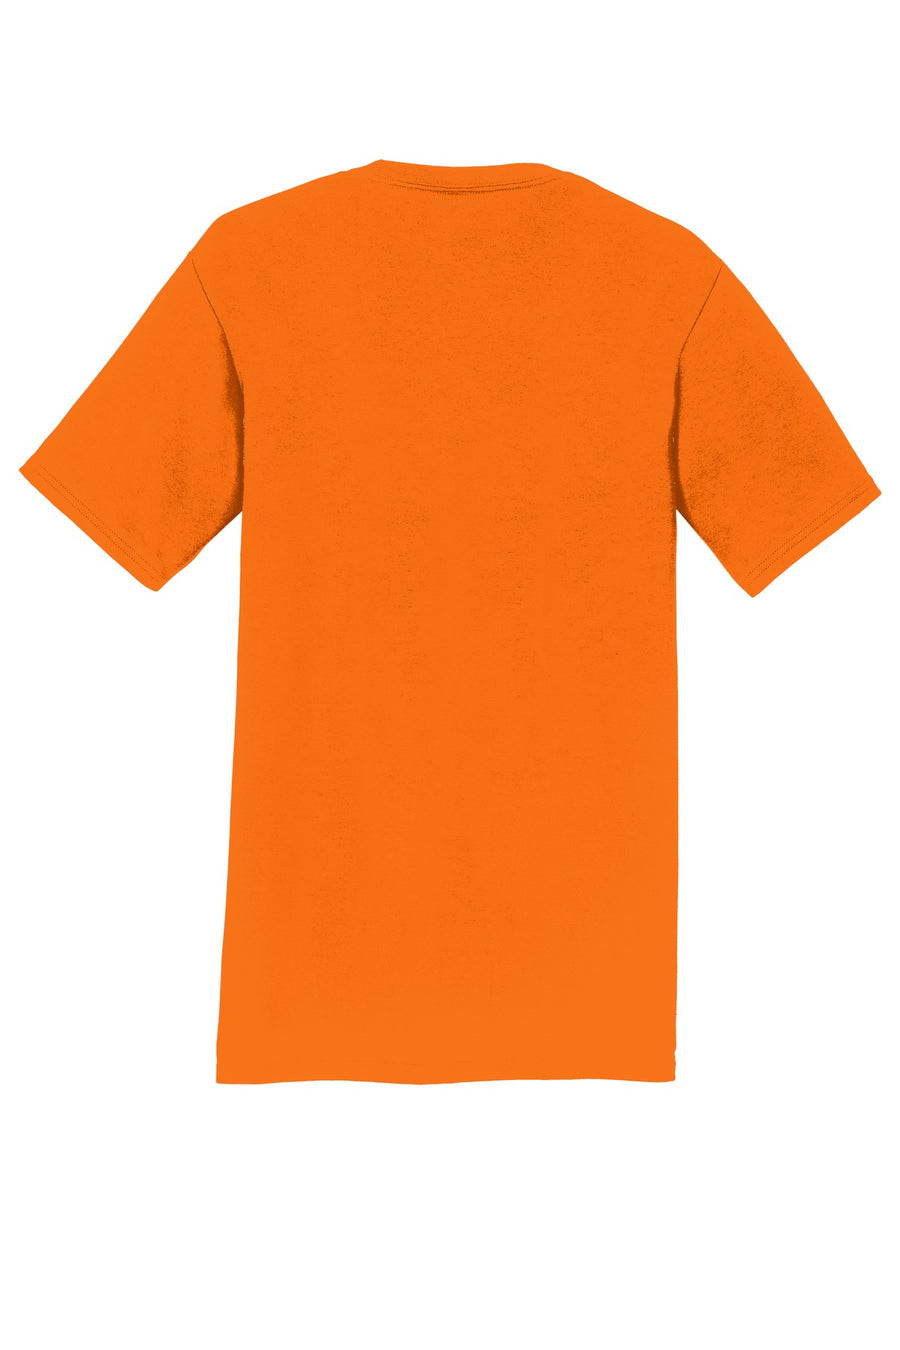 PC450-Tennessee Orange-back_flat